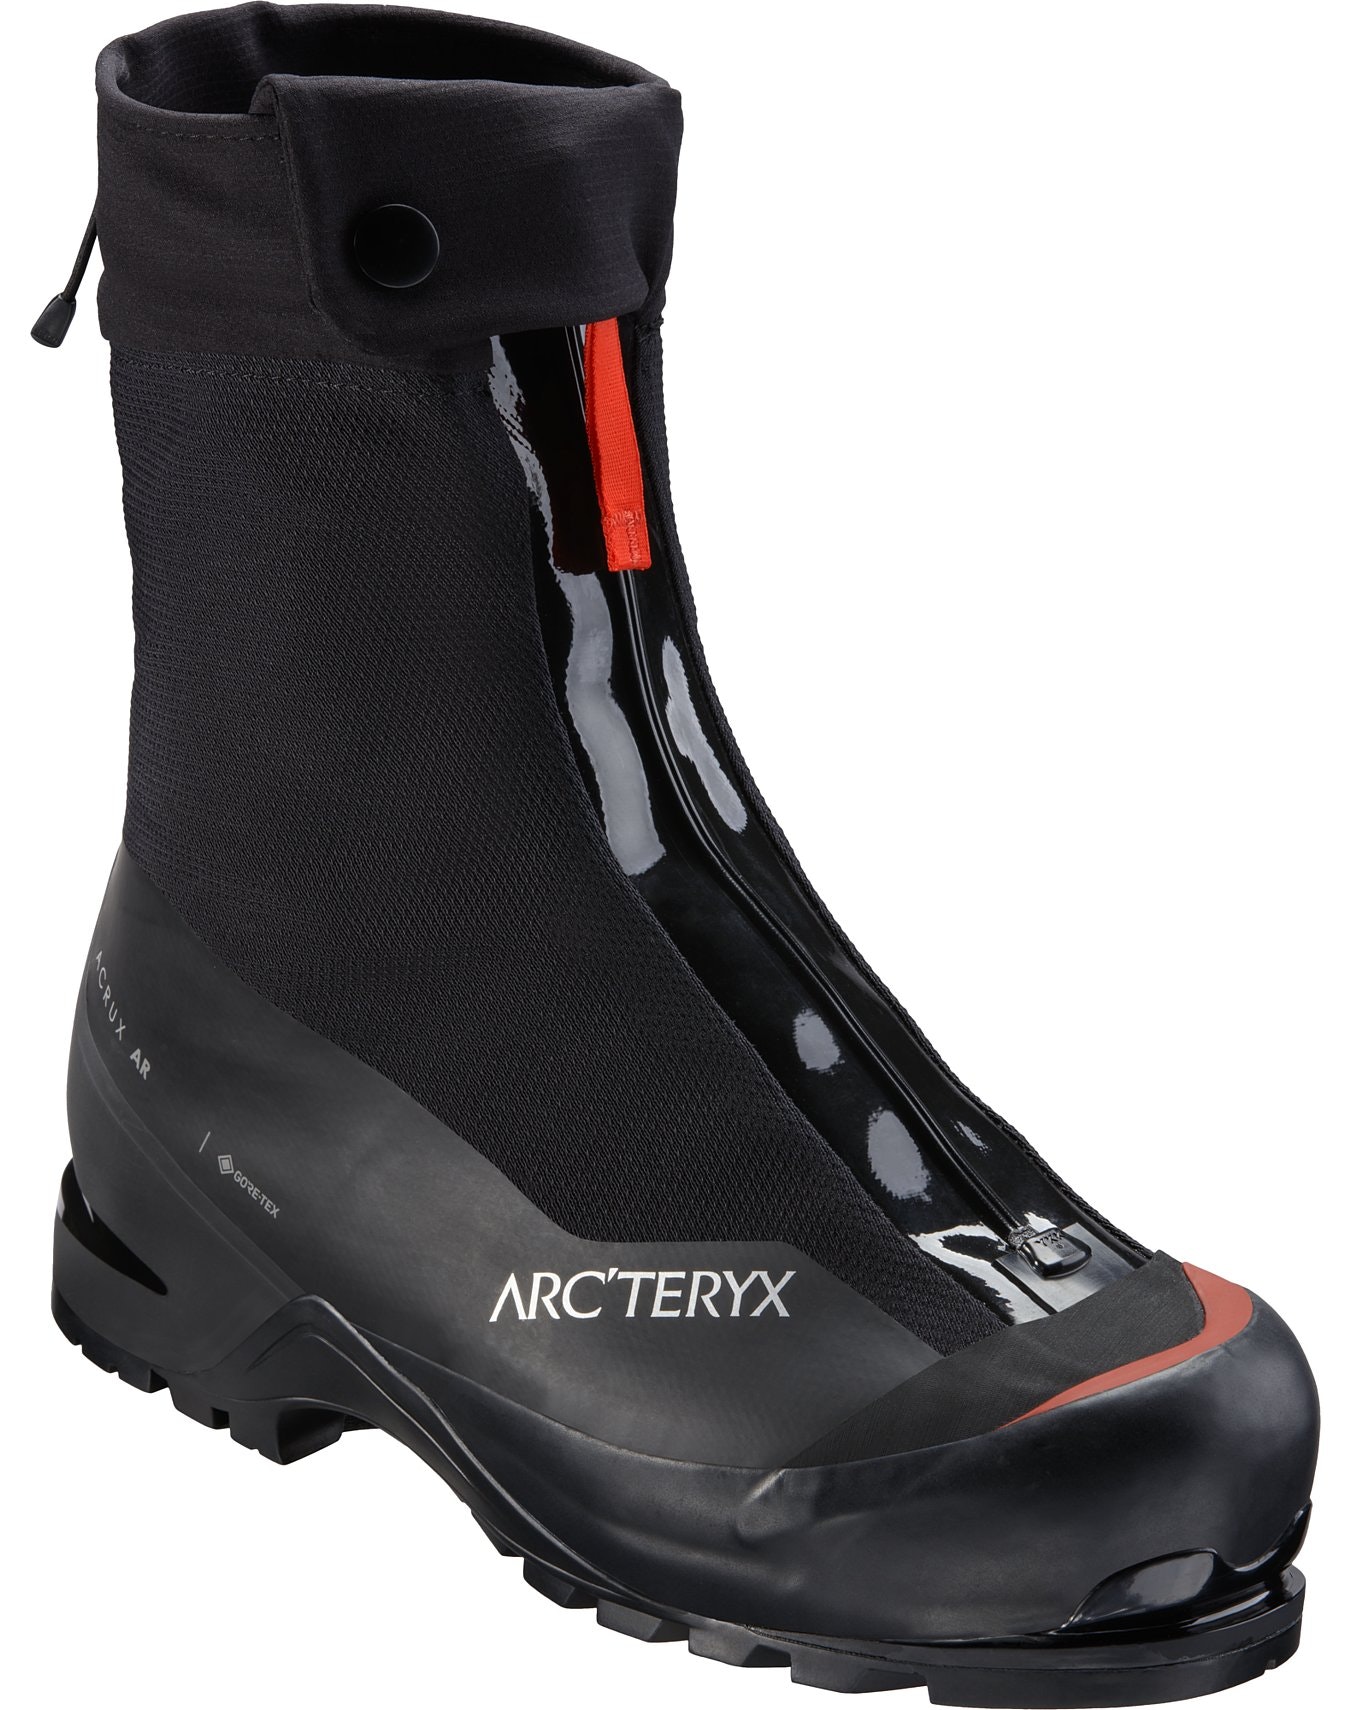 Arc'teryx Acrux AR Mountaineering Boot | Men's Mountaineering